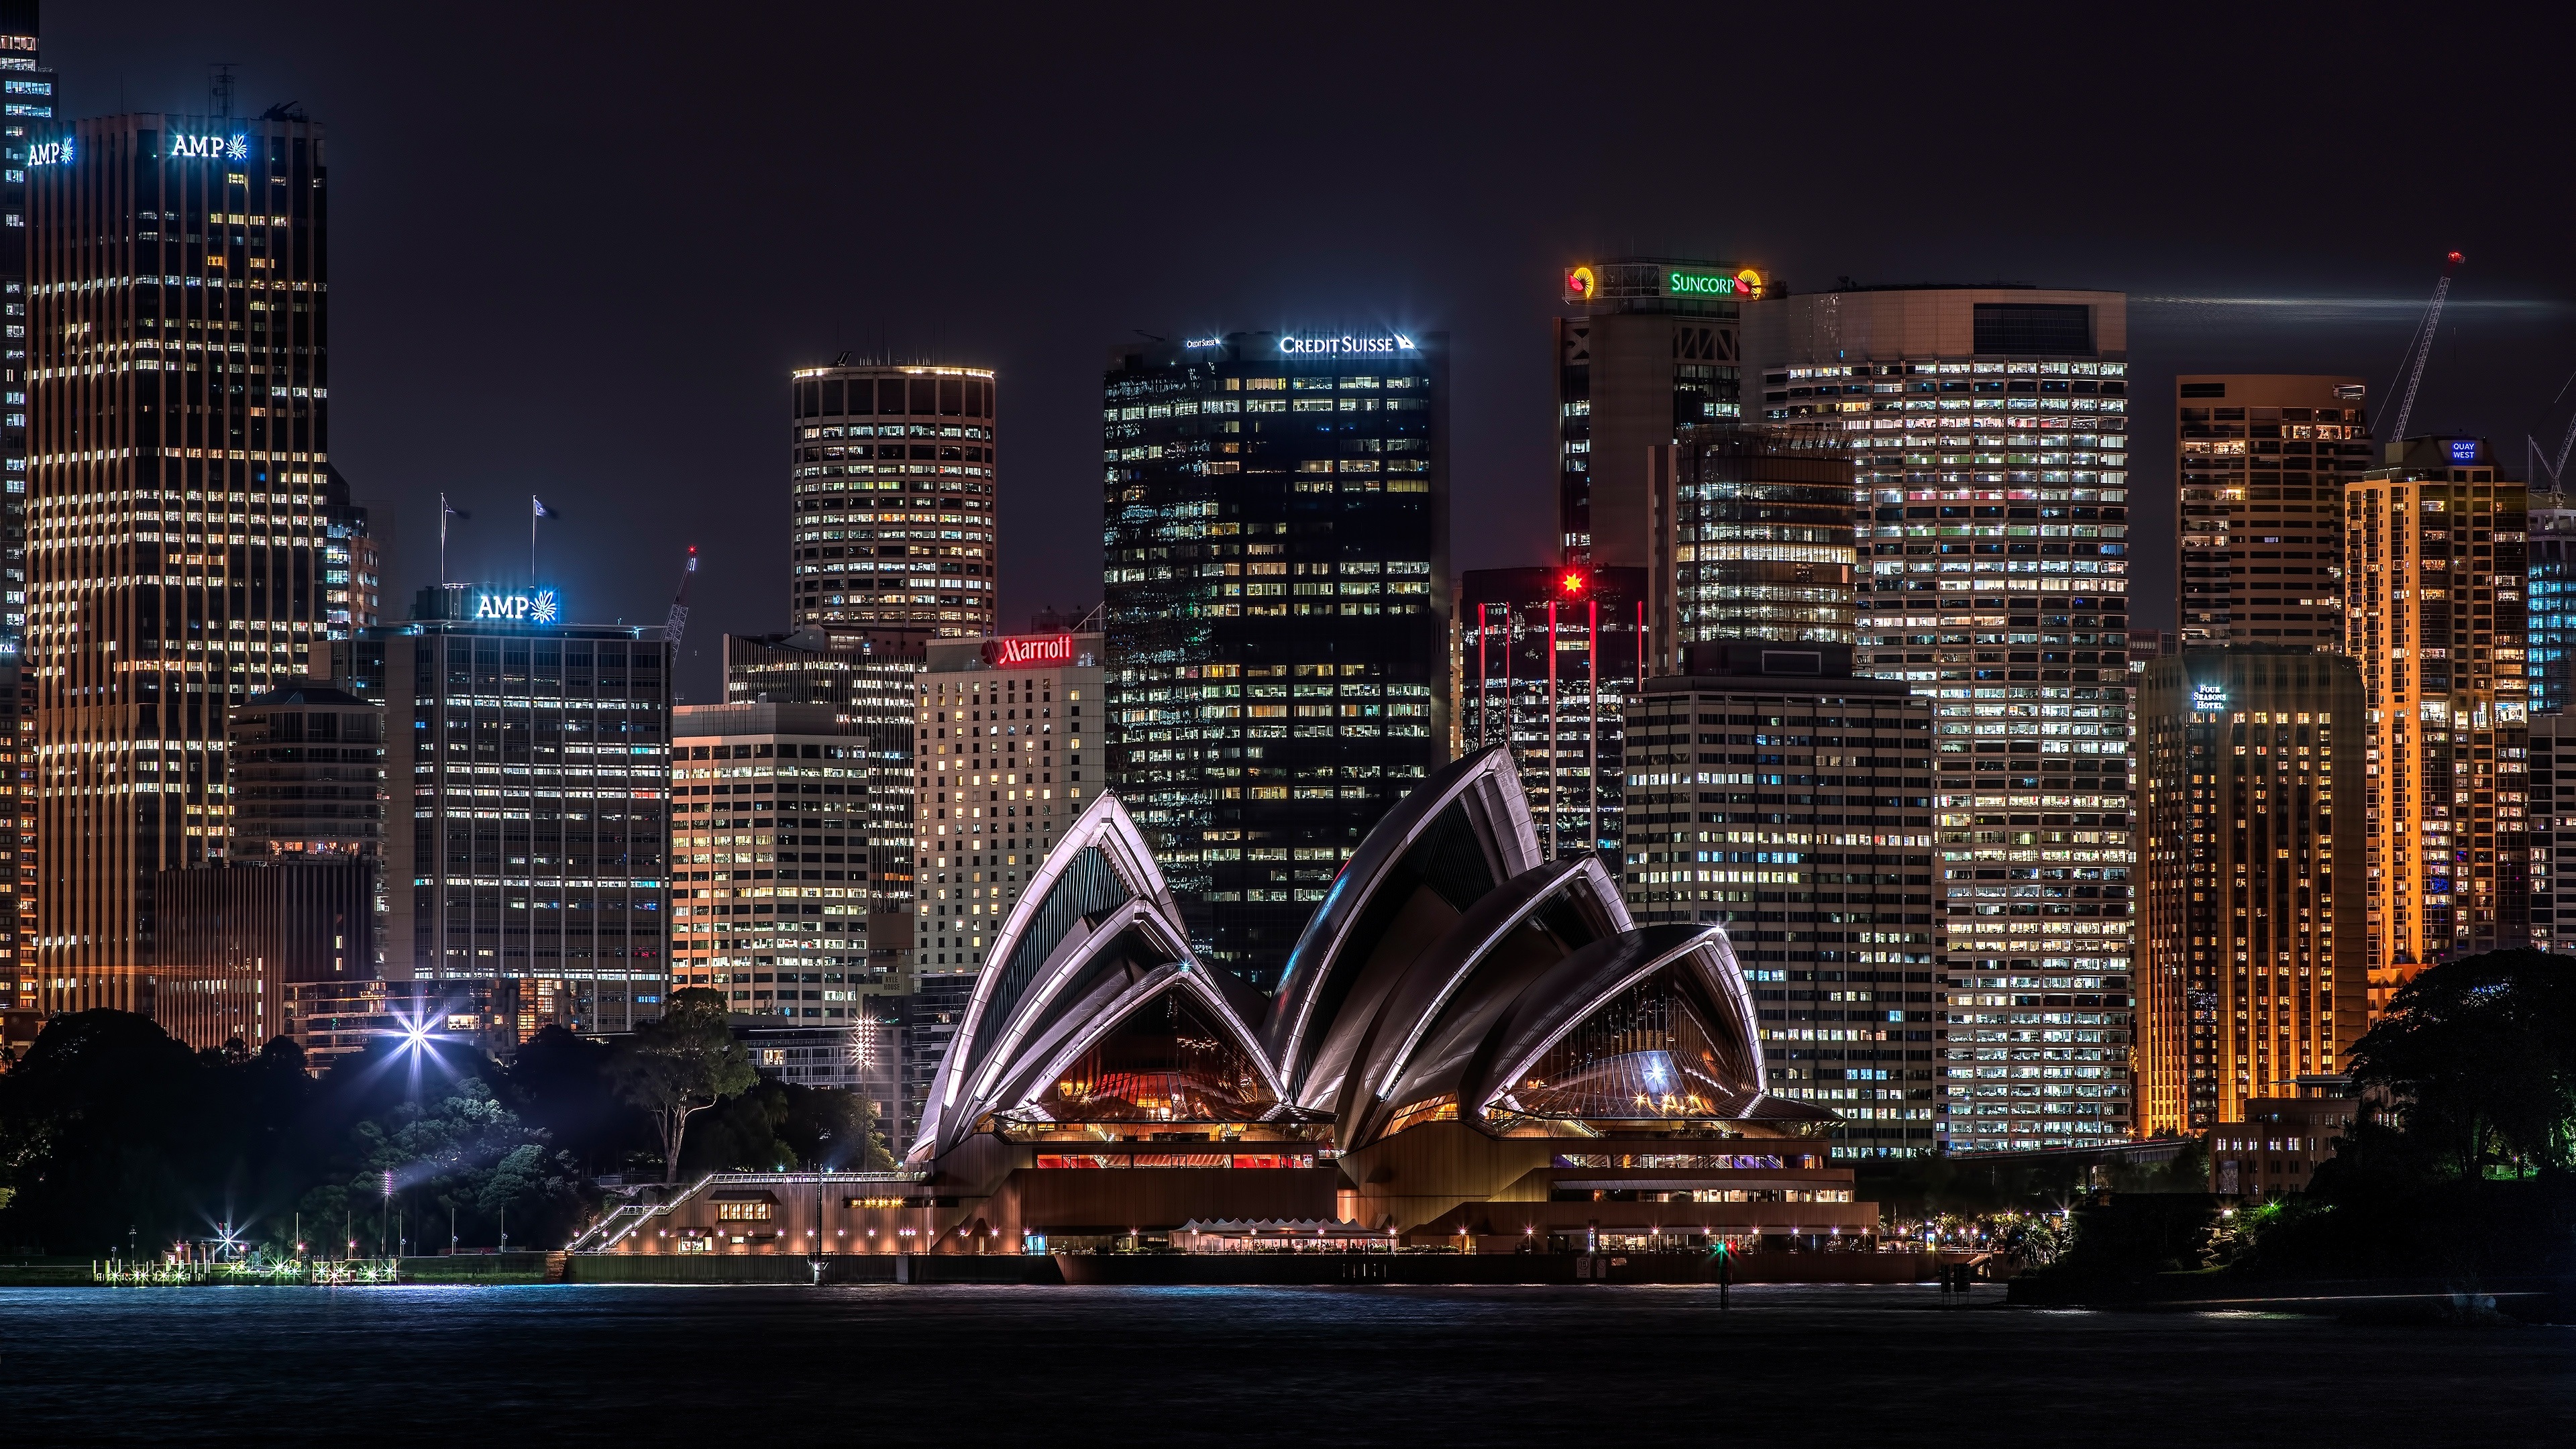 Wallpaper Australia, Sydney, opera house, skyscrapers, illumination, night 3840x2160 UHD 4K Picture, Image